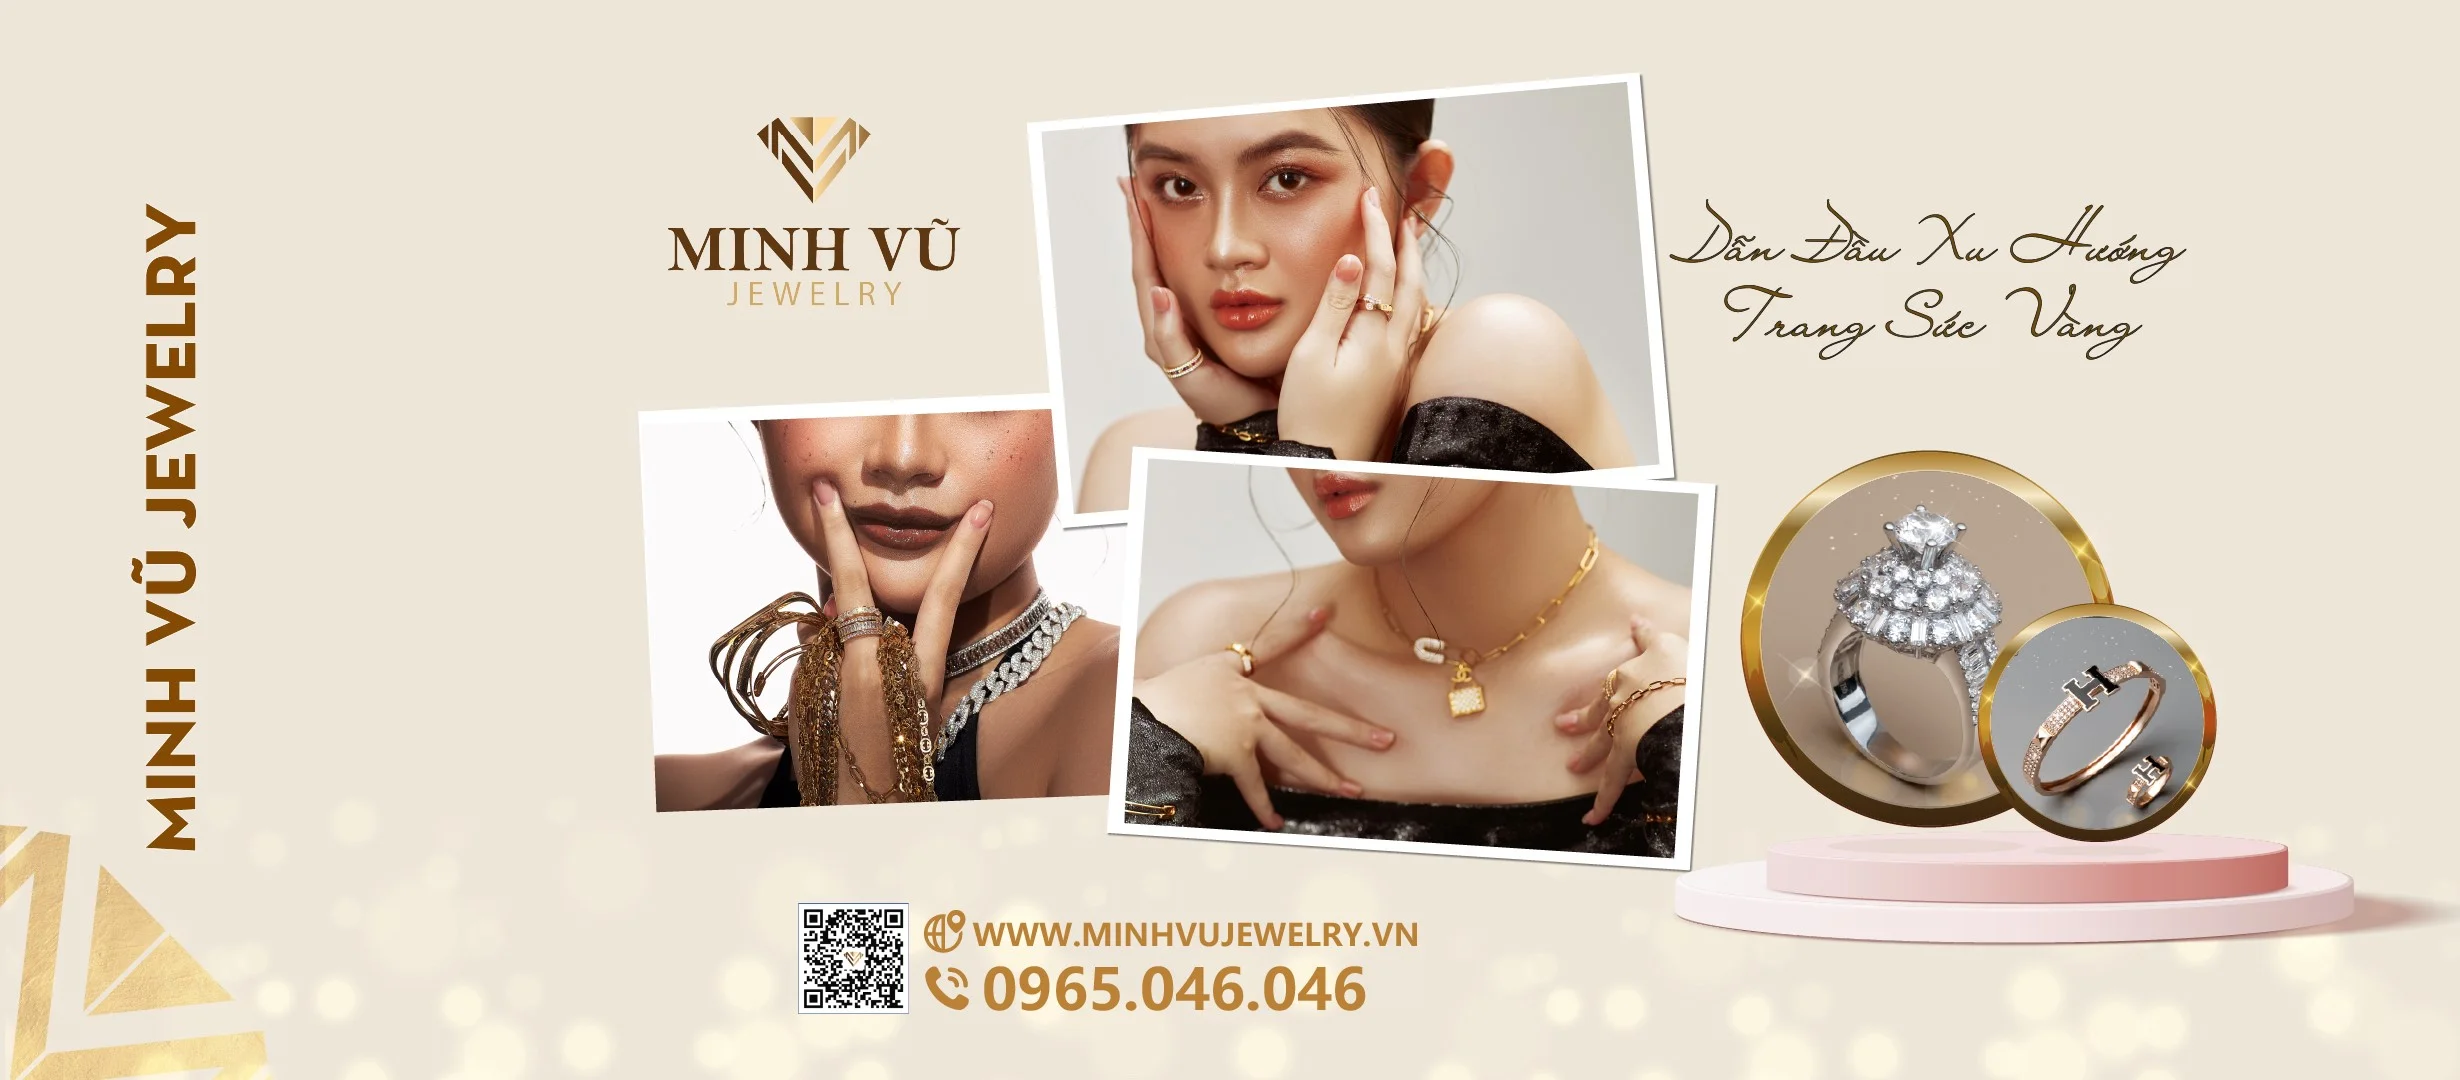 Minh Vũ Jewelry